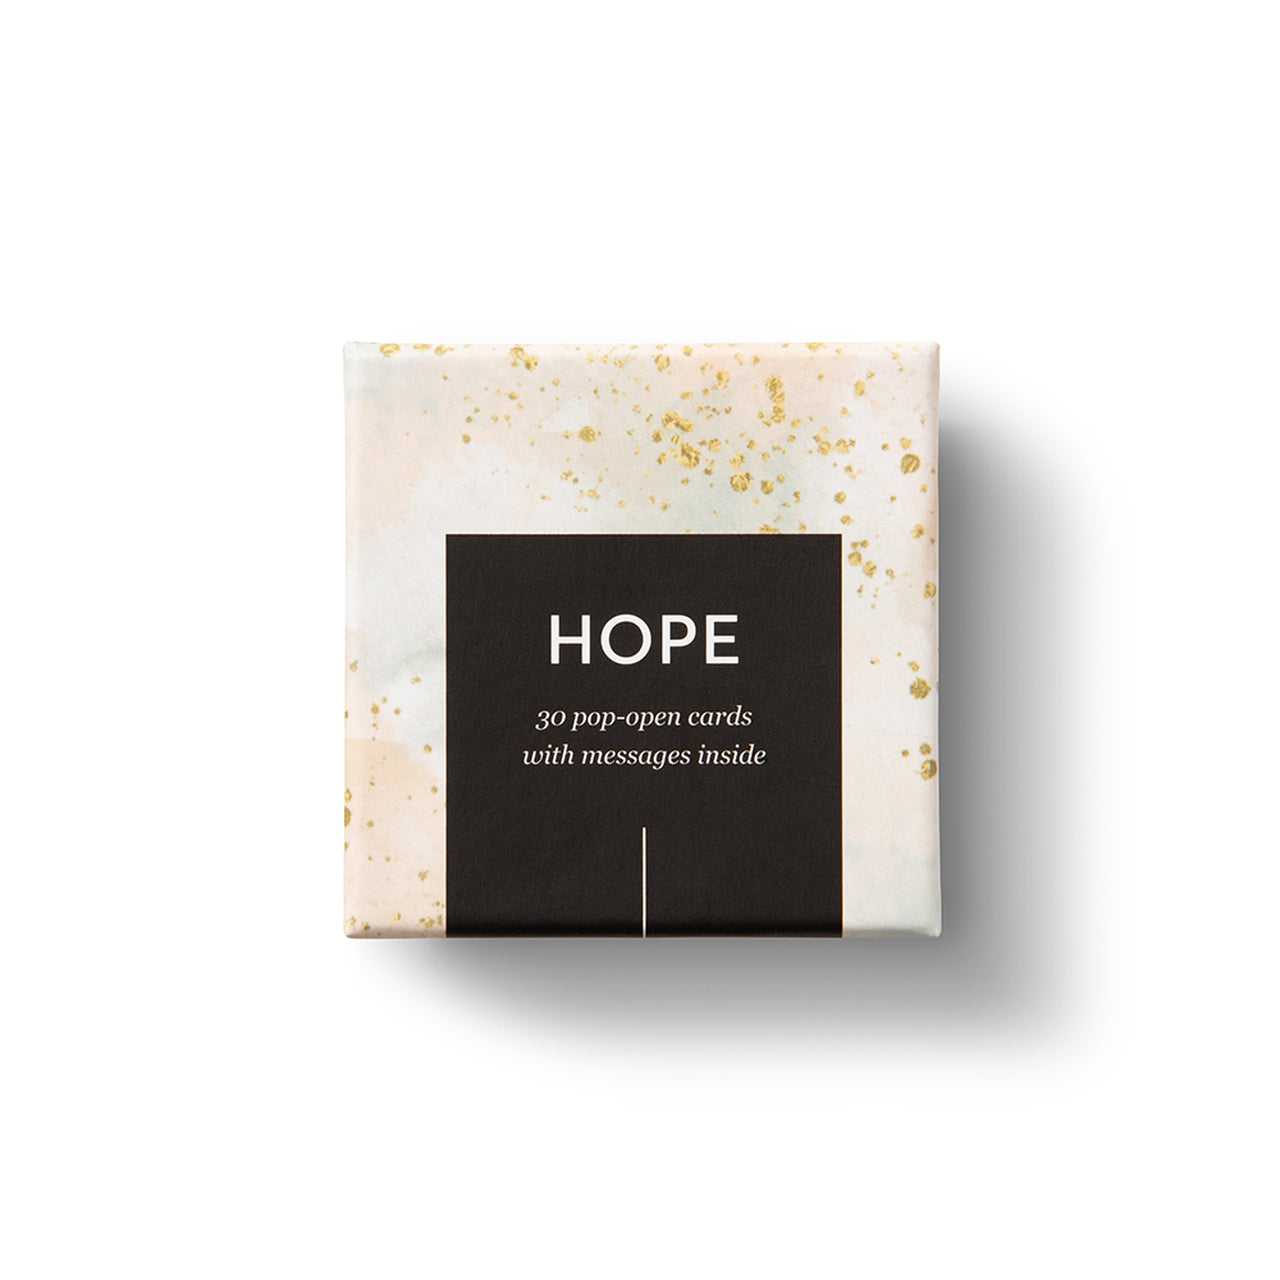 Thoughtfulls - Hope